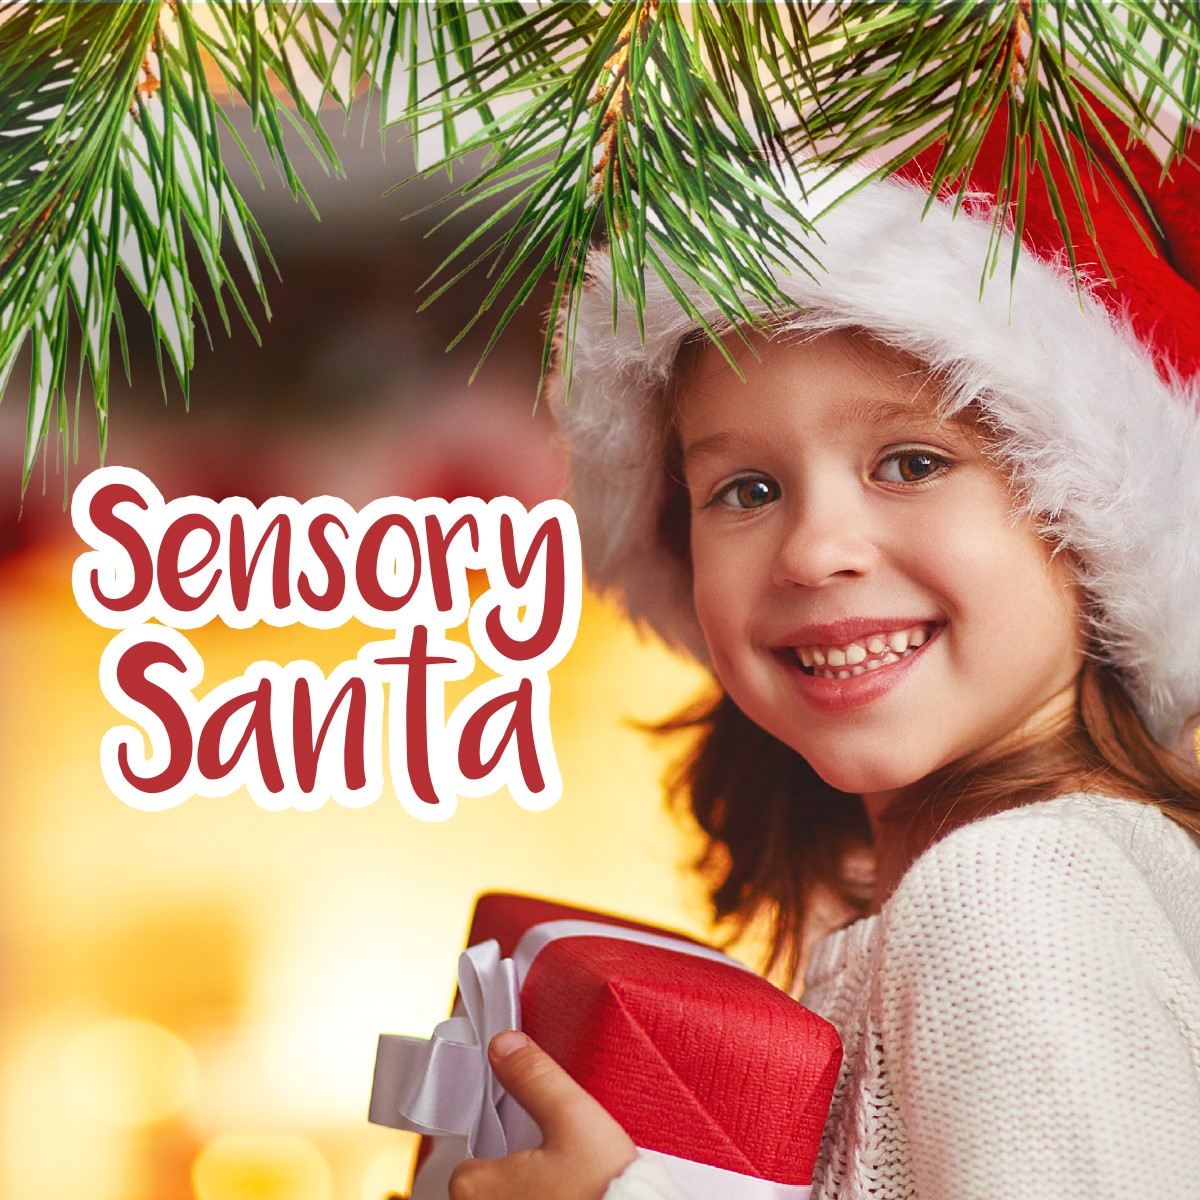 Sensory Santa Girl